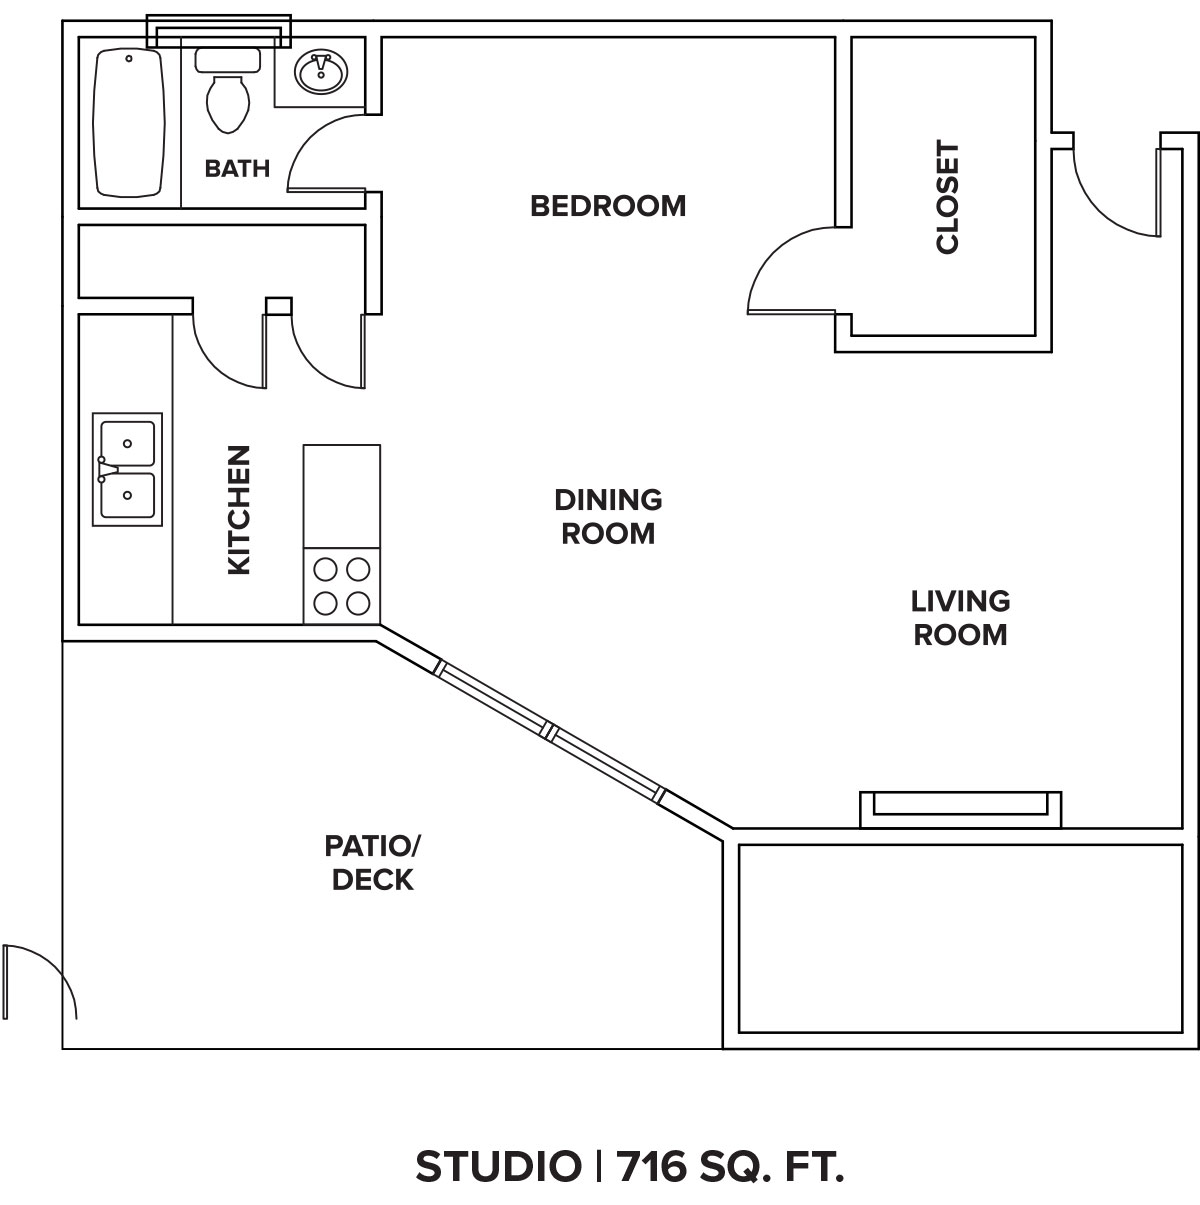 Villas-of-Oak-Creste_Floor-Plans_V2_Studio-716-sq-ft.jpg